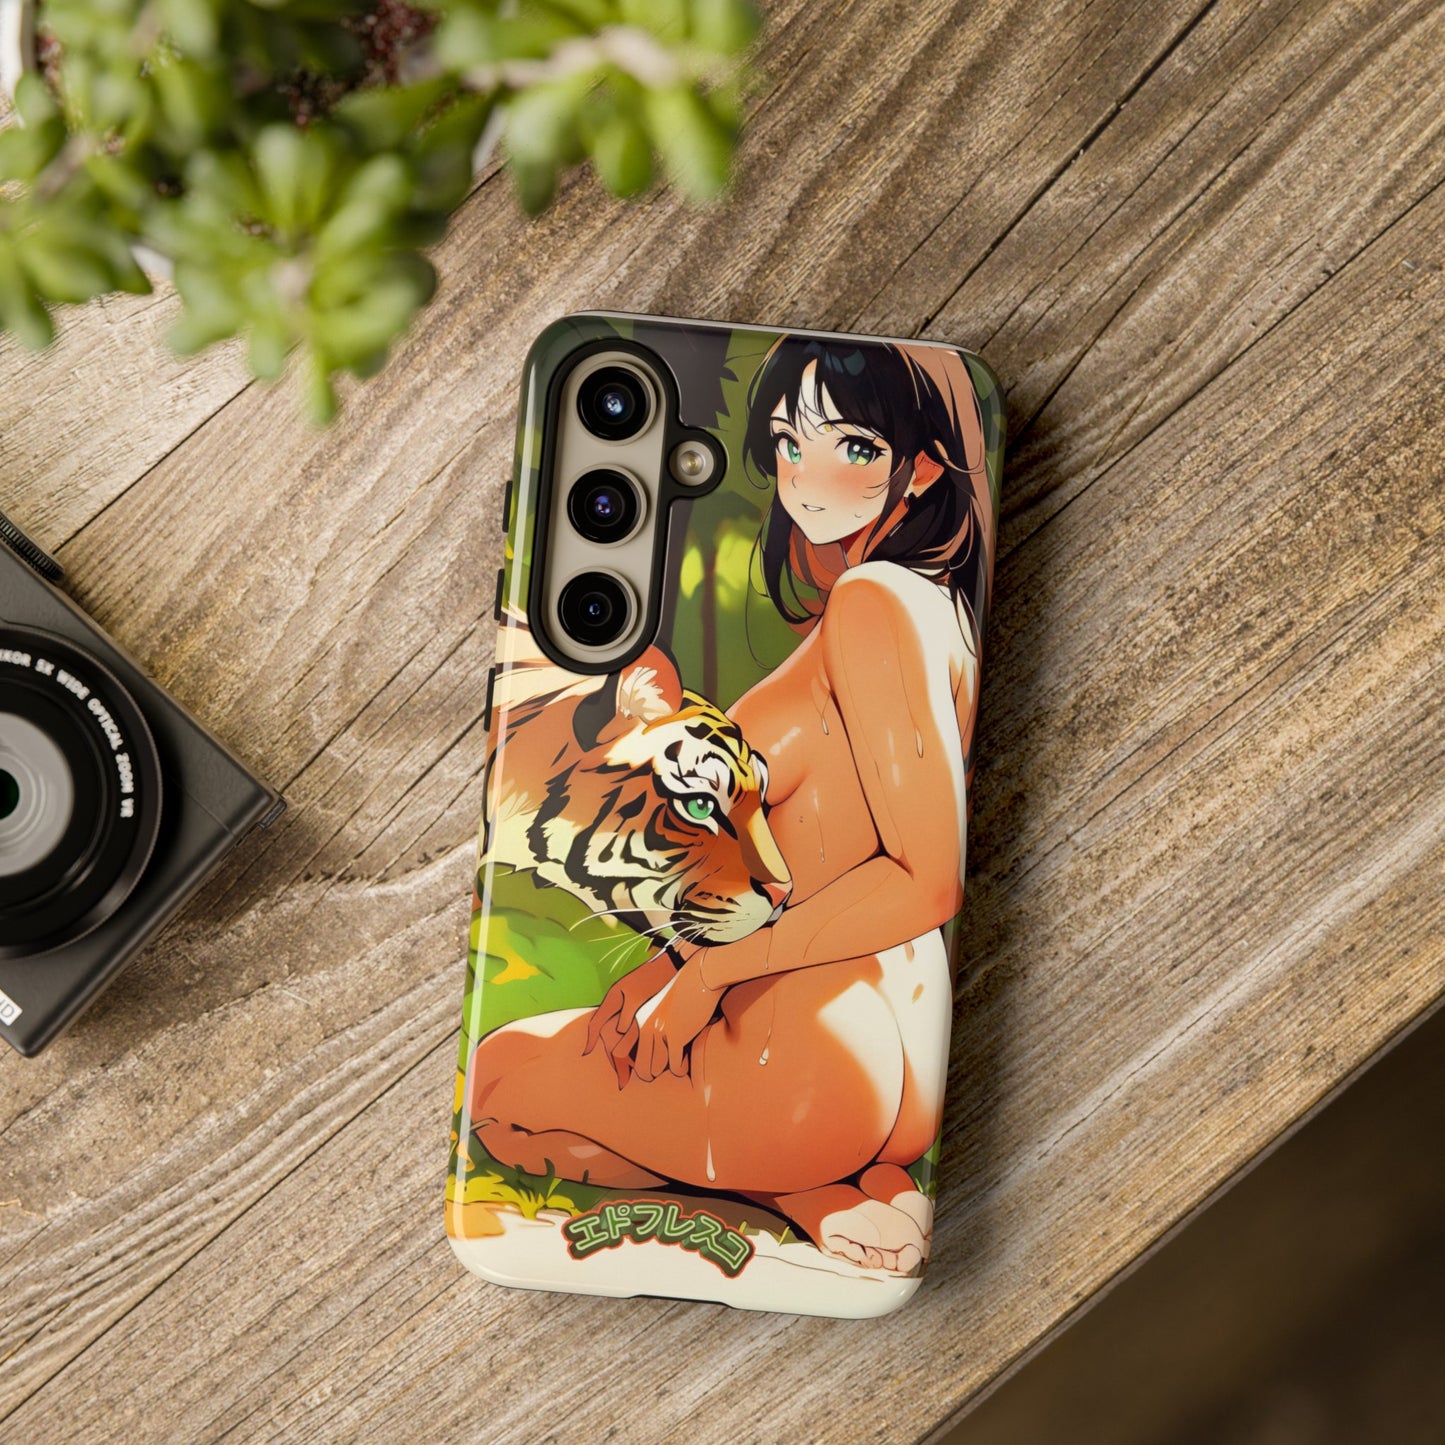 Anime Style Art Tough Cases- "Jungle Queens 2"